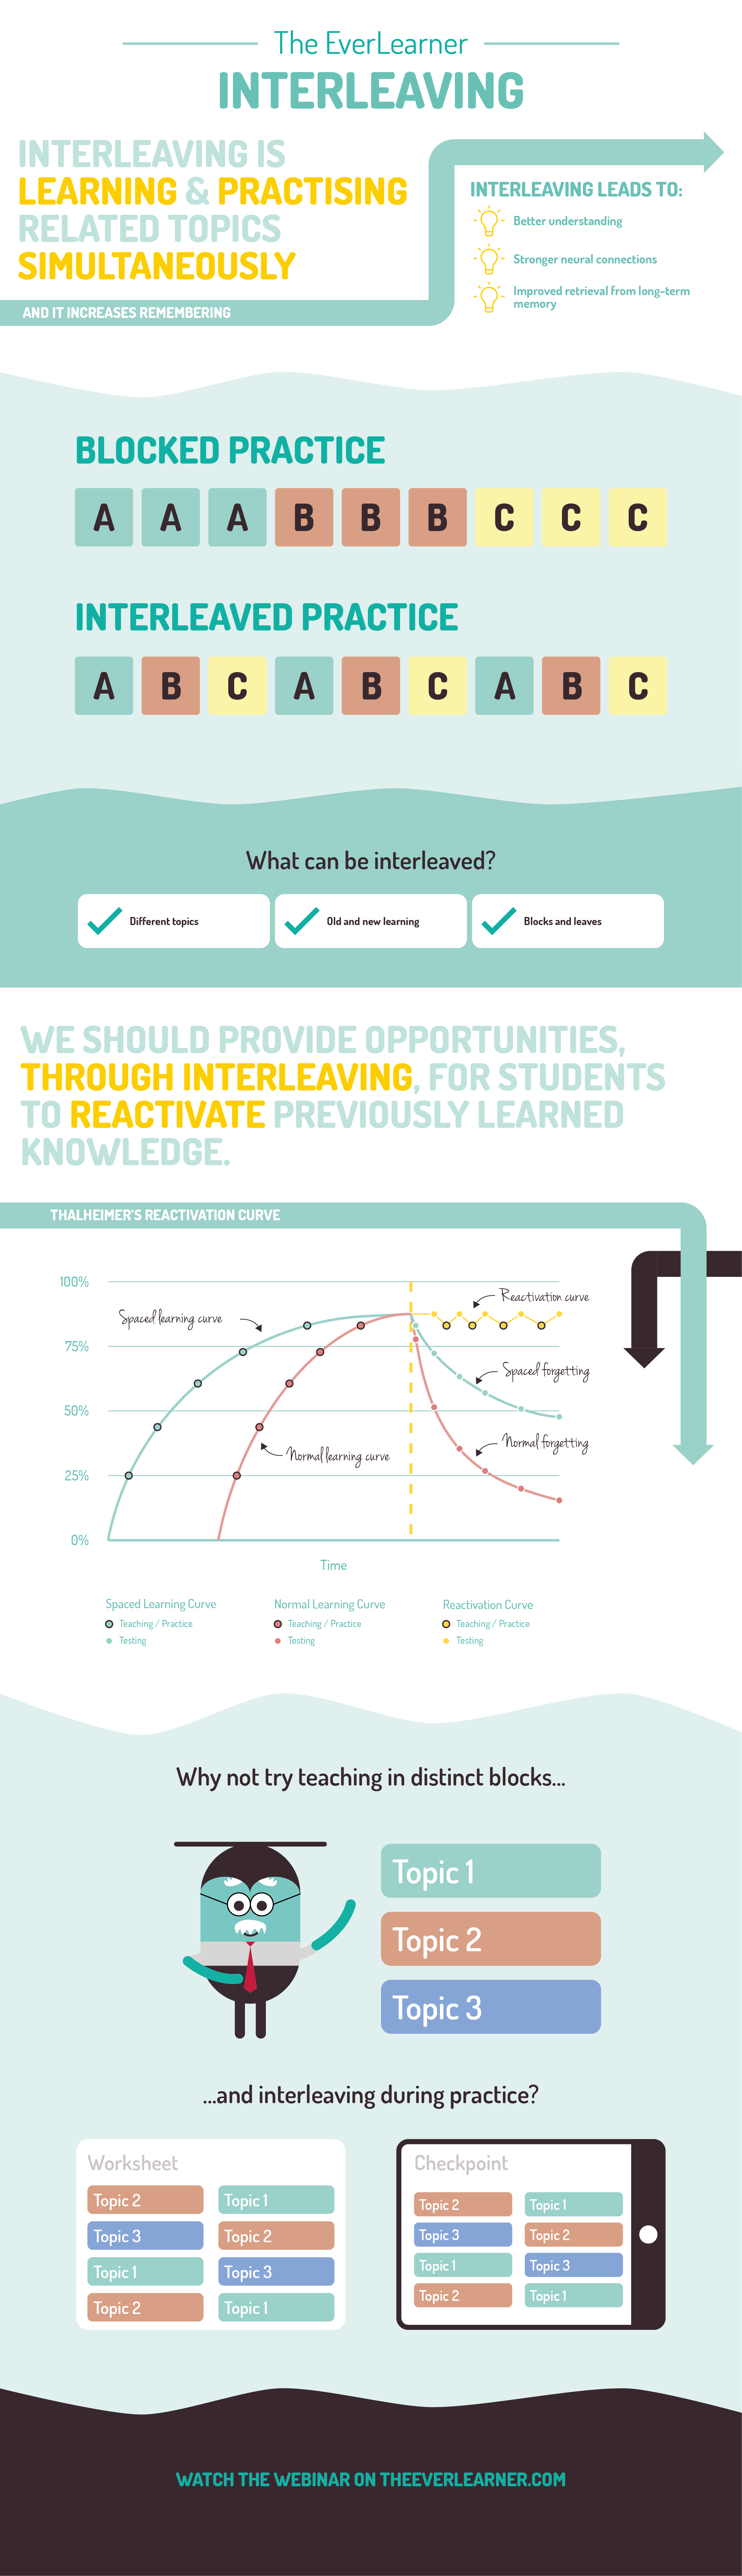 Interleaving Infographic